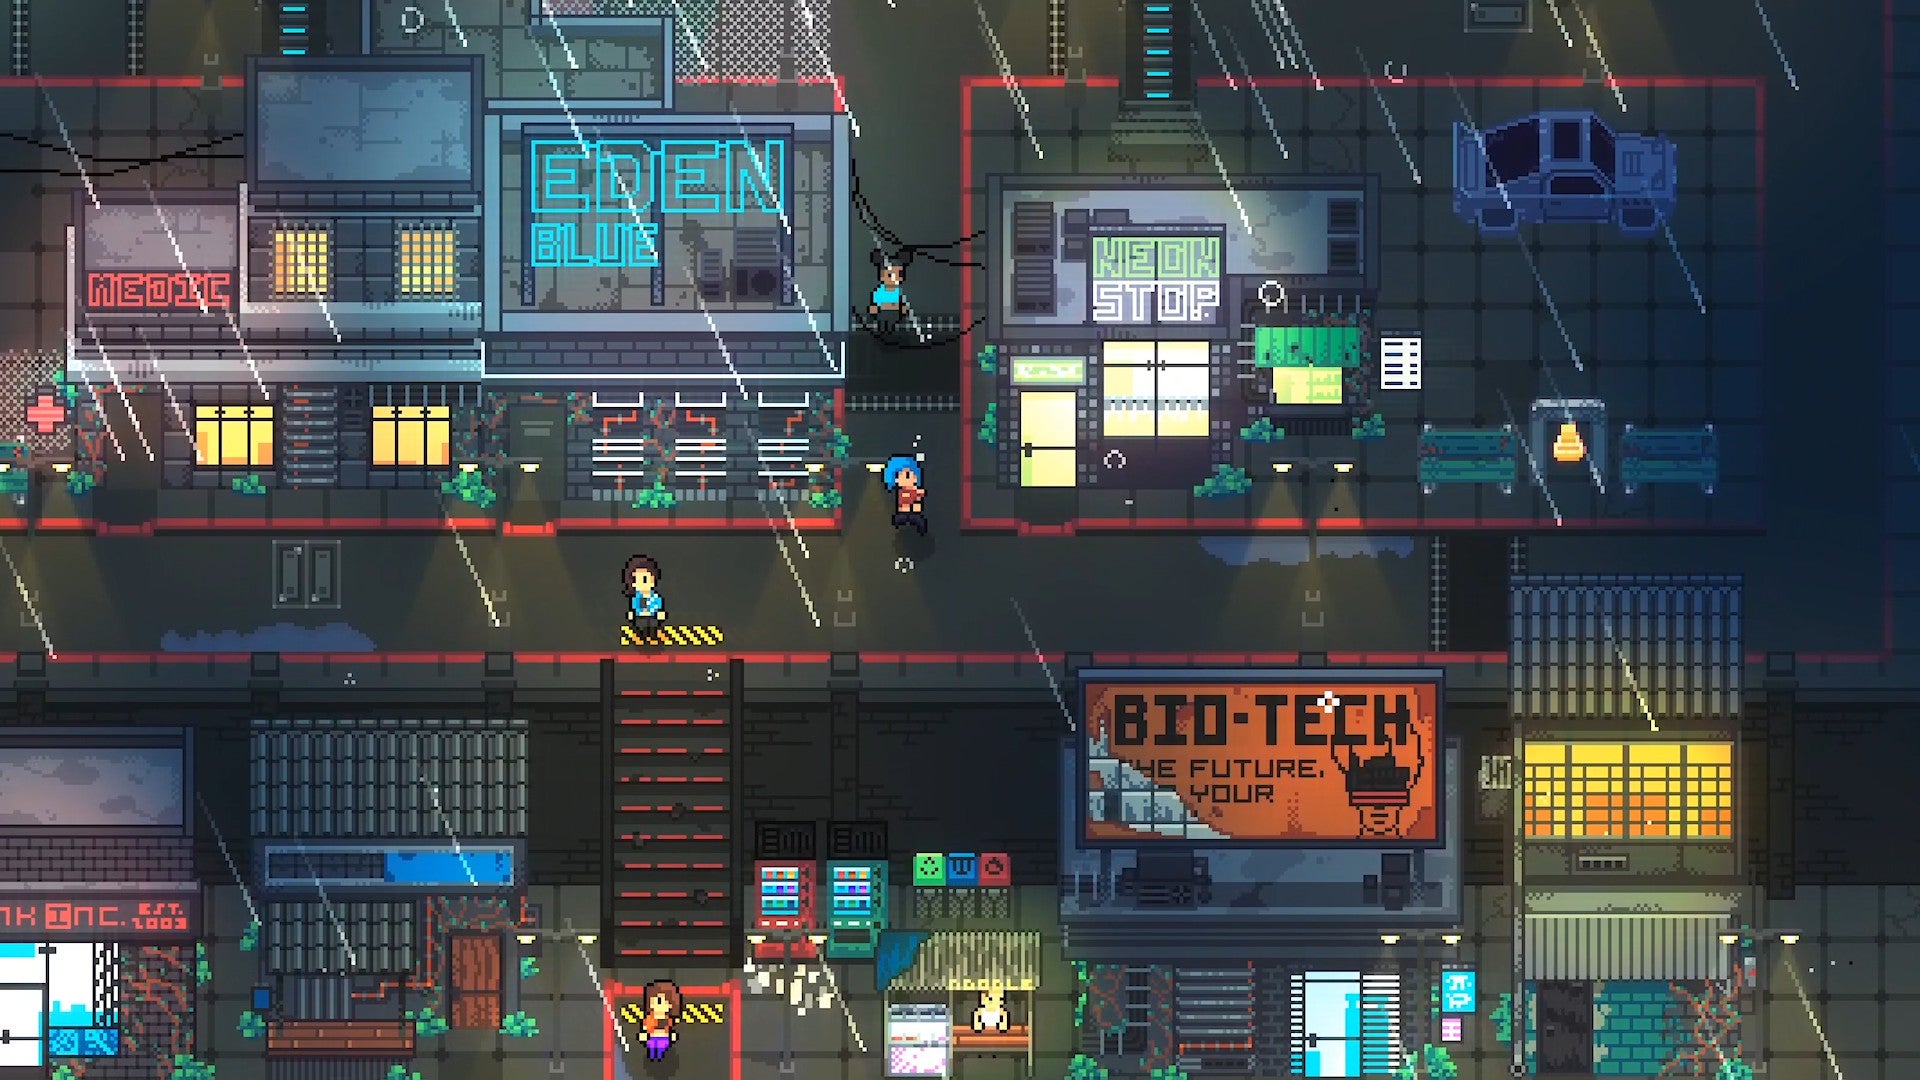 The cyberpunk city in Neon Blight